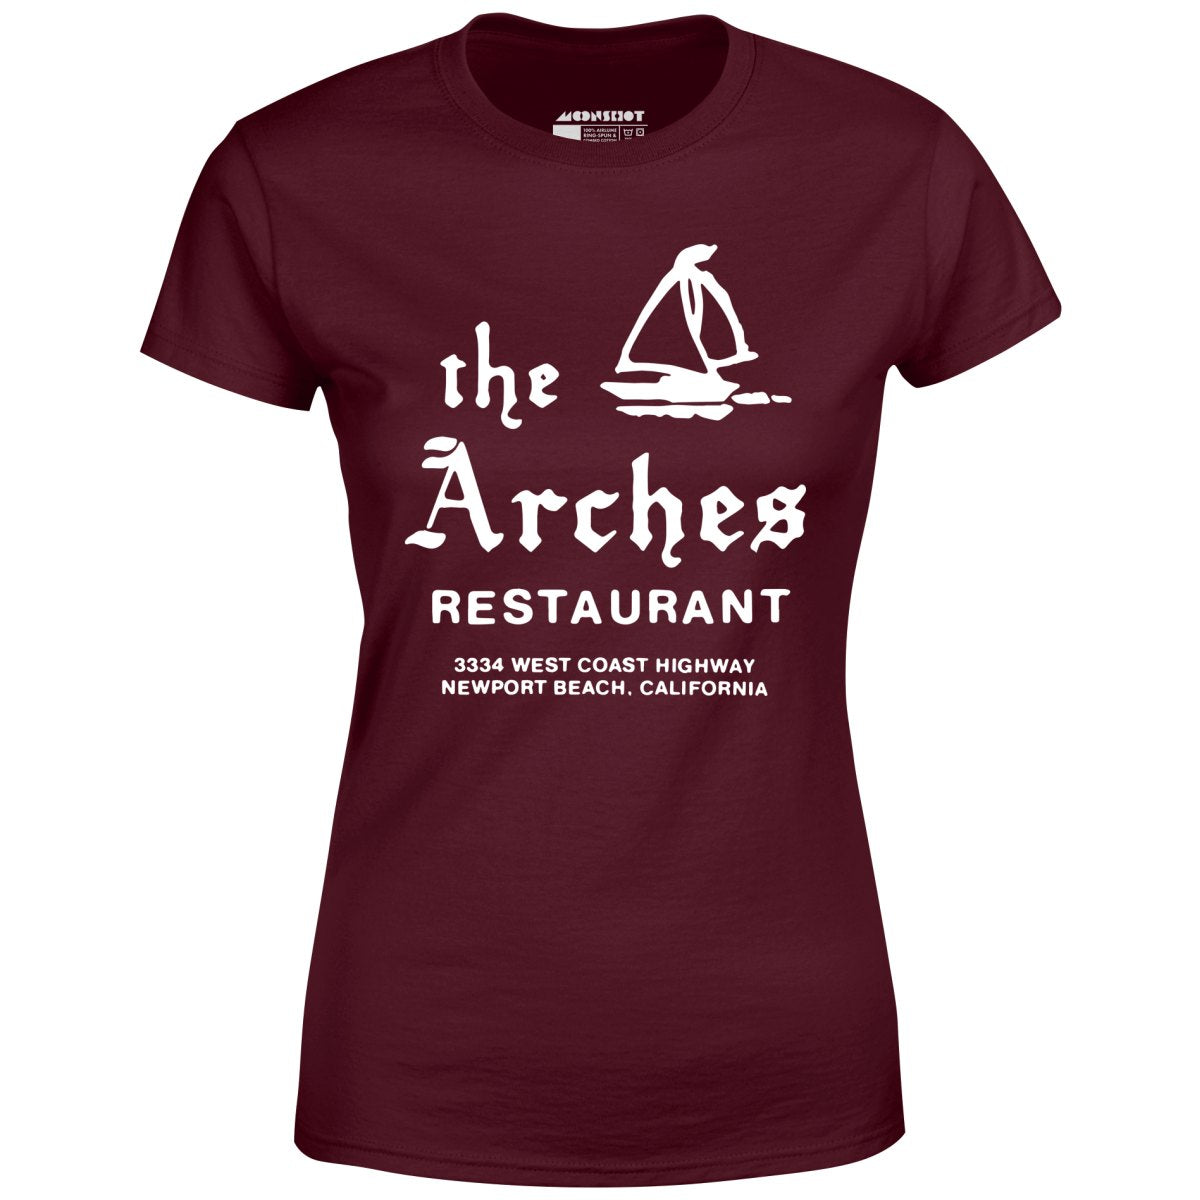 The Arches - Newport Beach, CA - Vintage Restaurant - Women's T-Shirt